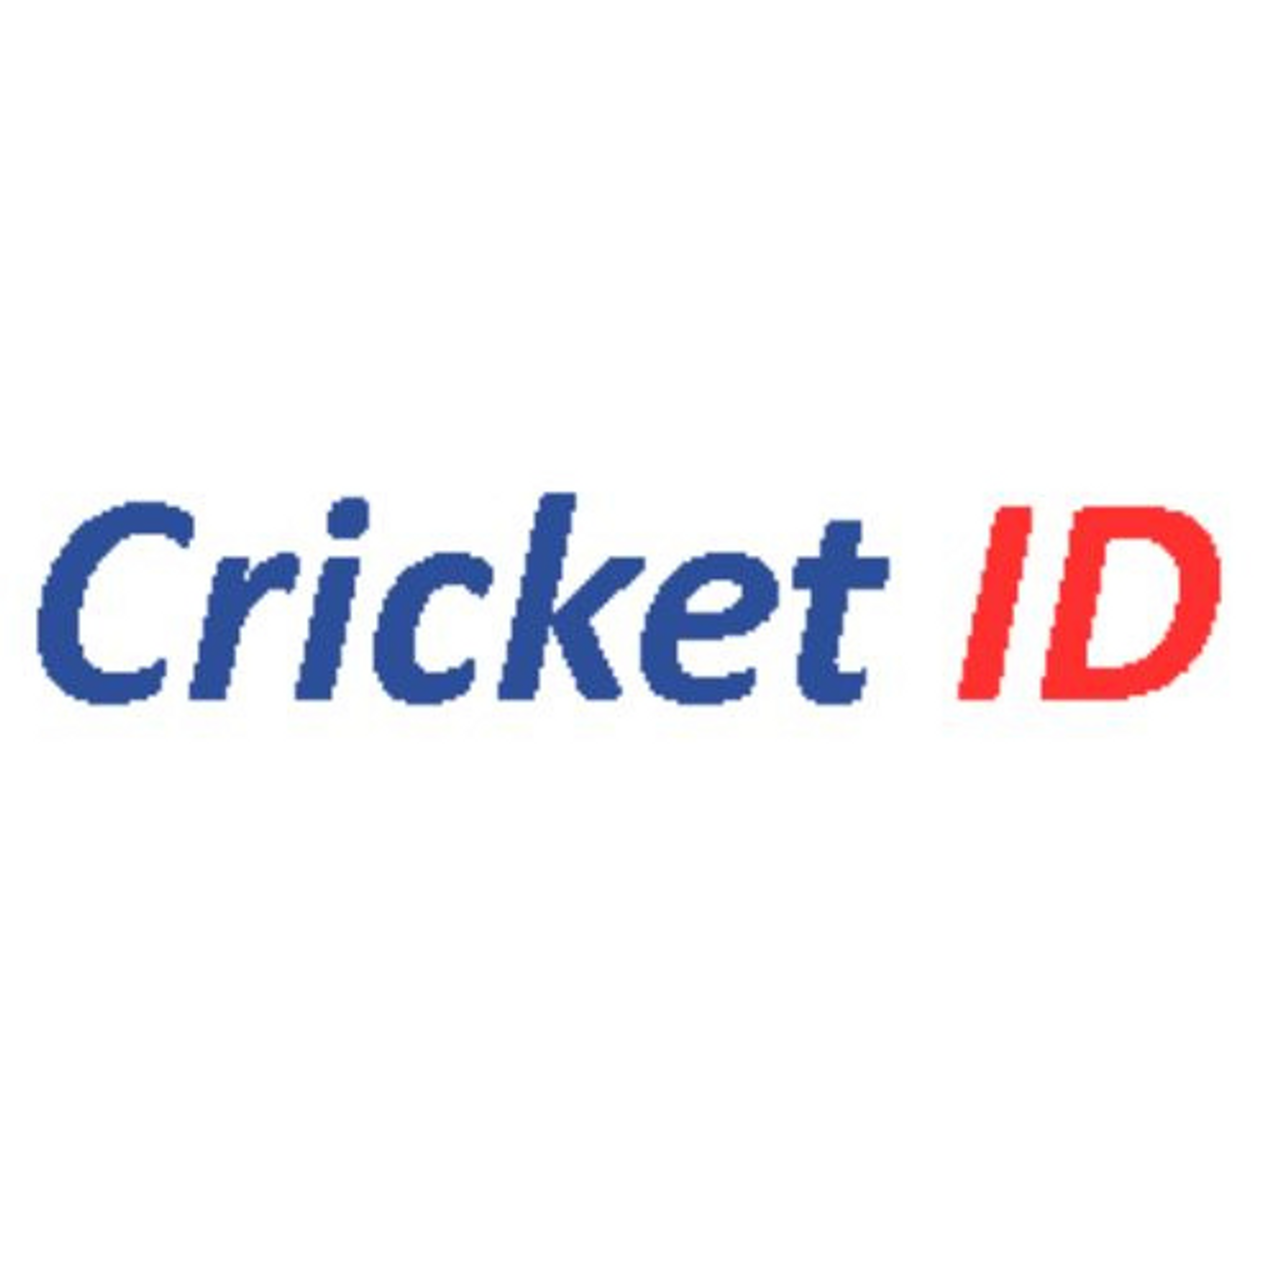 Cricketidonline1